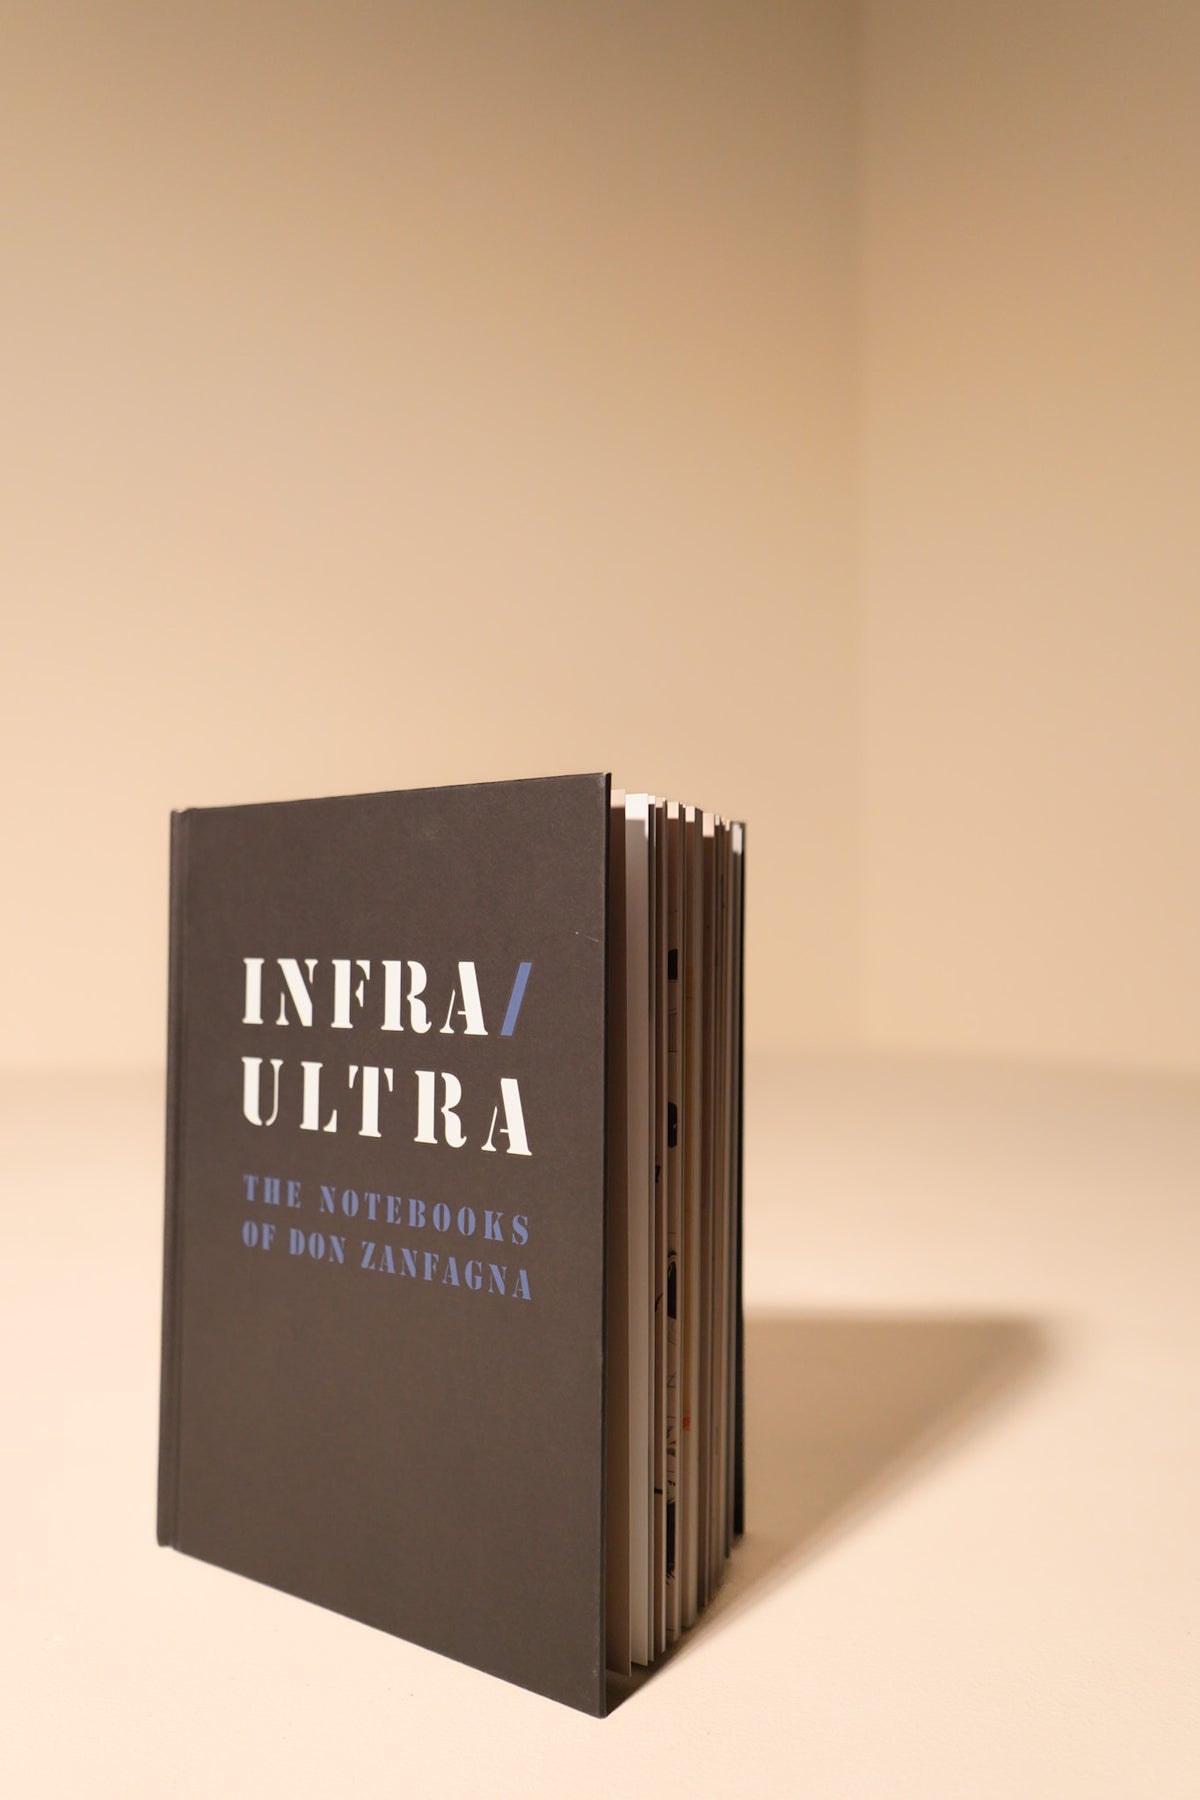 Infra/Ultra: The Notebooks of Don ZanFagna